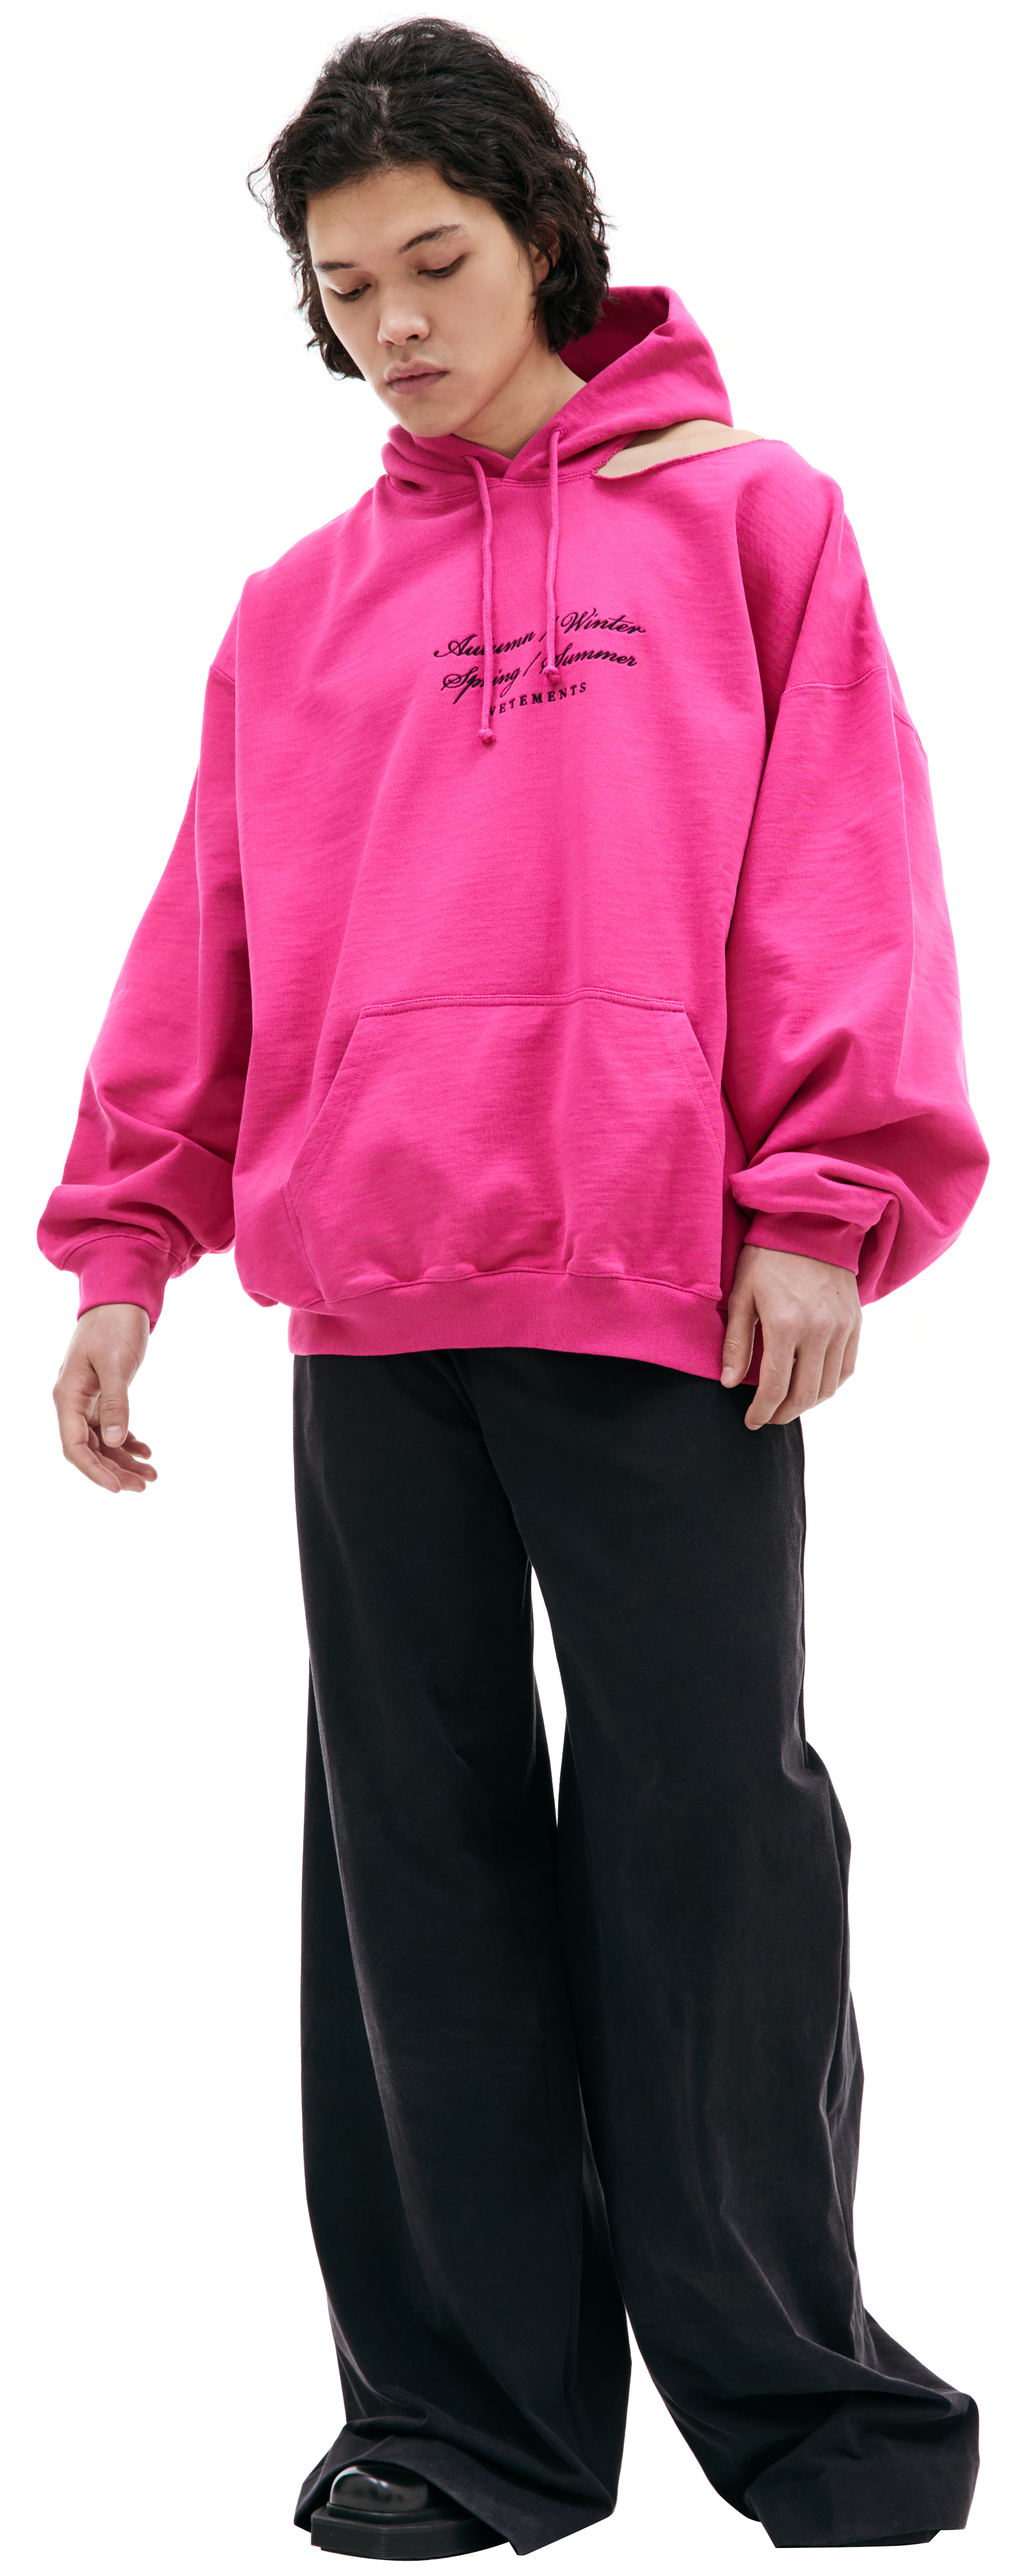 Pink oversized hoodie